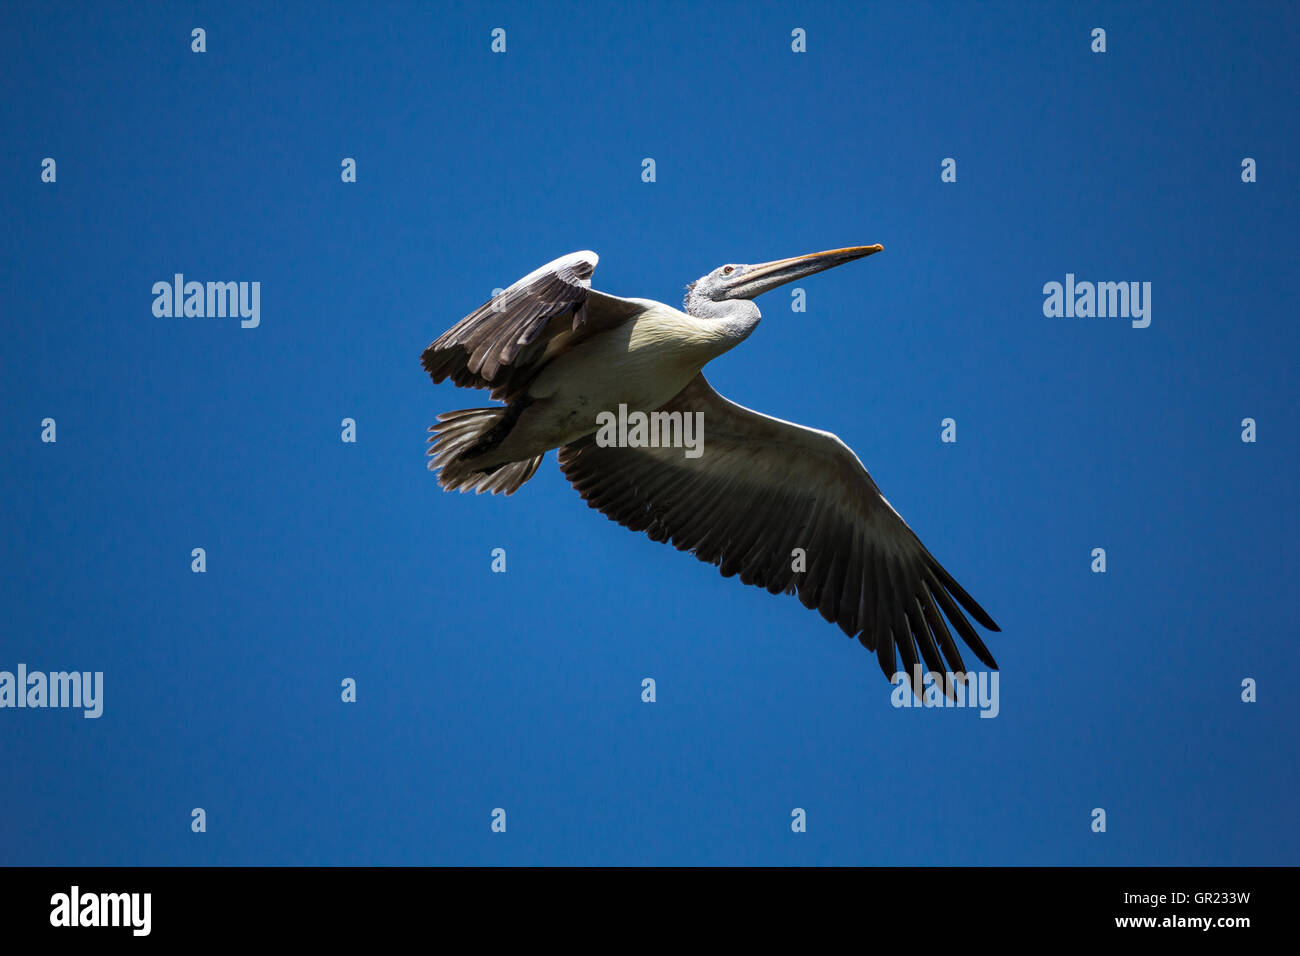 Flying Pelican in blue sky. Stock Photo